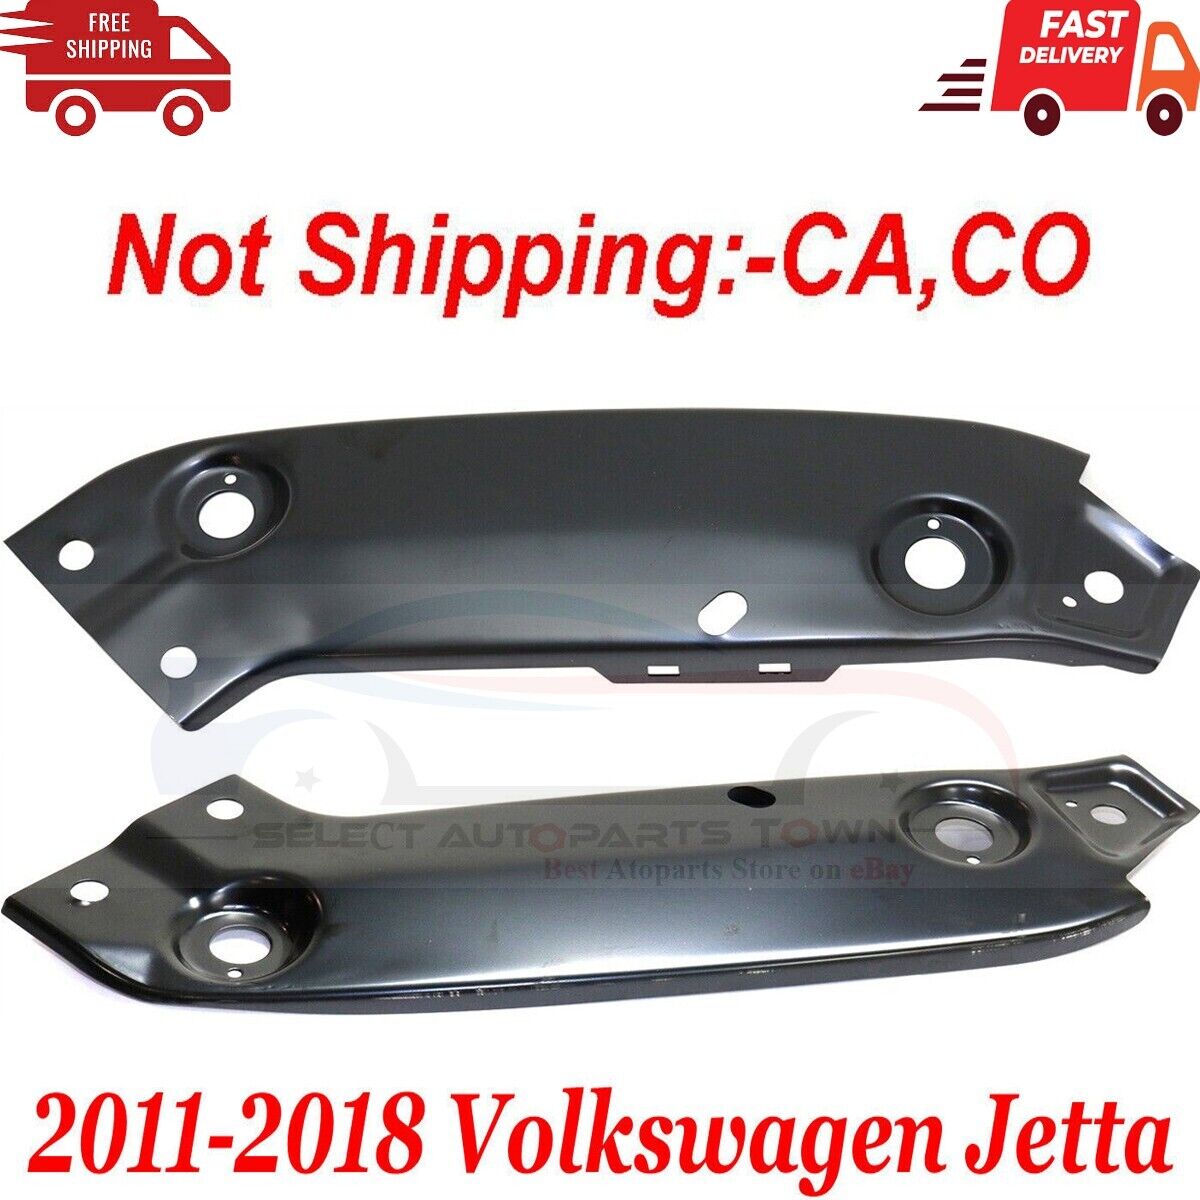 New Fits 2011-2018 Volkswagen Jetta Upper Radiator Support Left & Right Set of 2